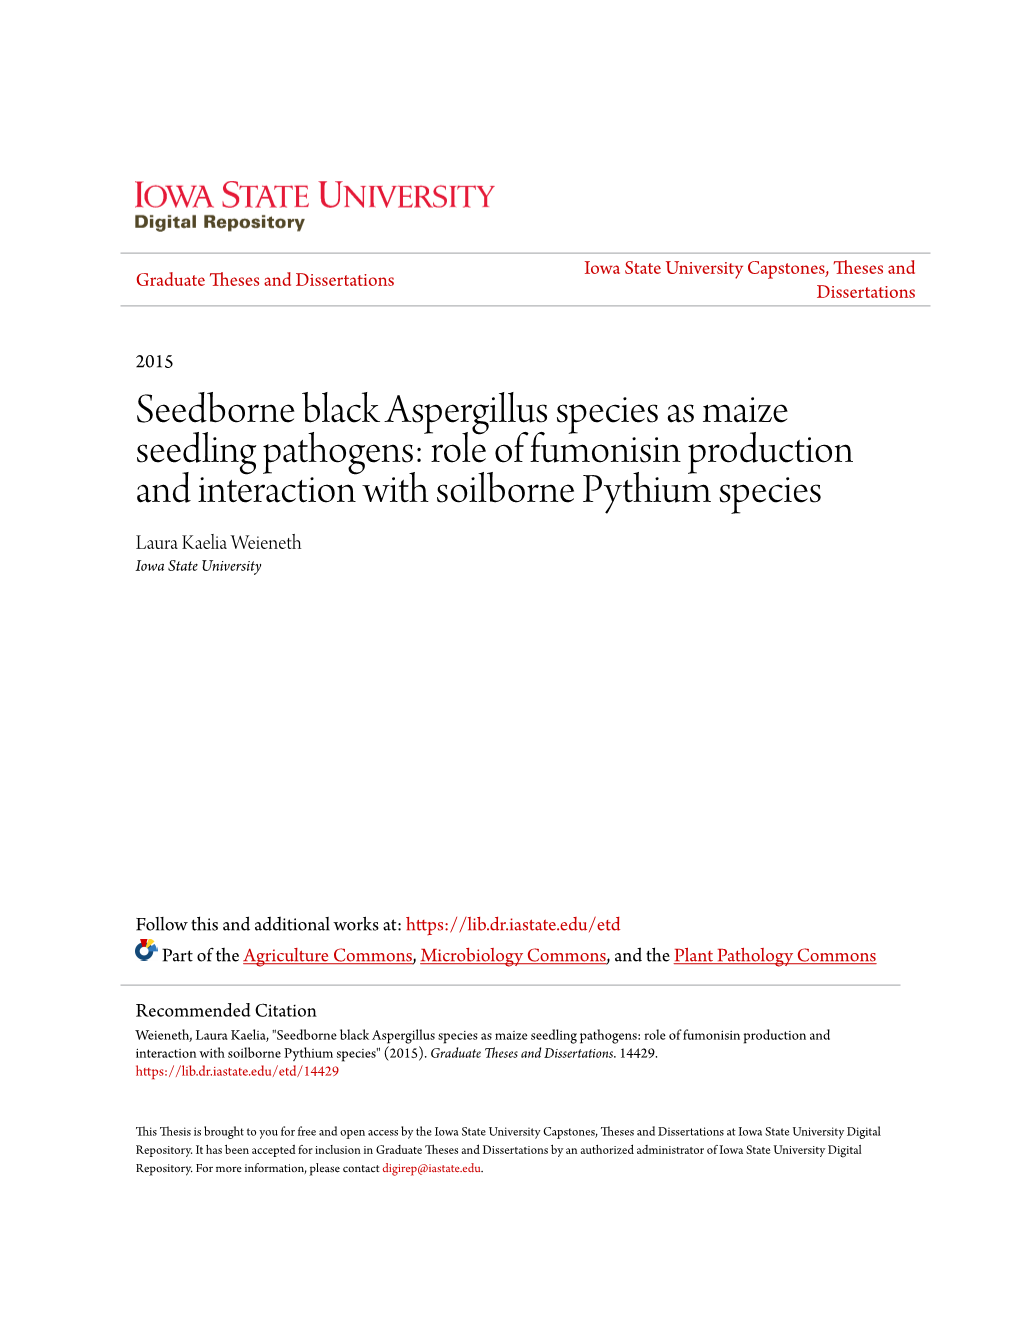 Seedborne Black Aspergillus Species As Maize Seedling Pathogens: Role